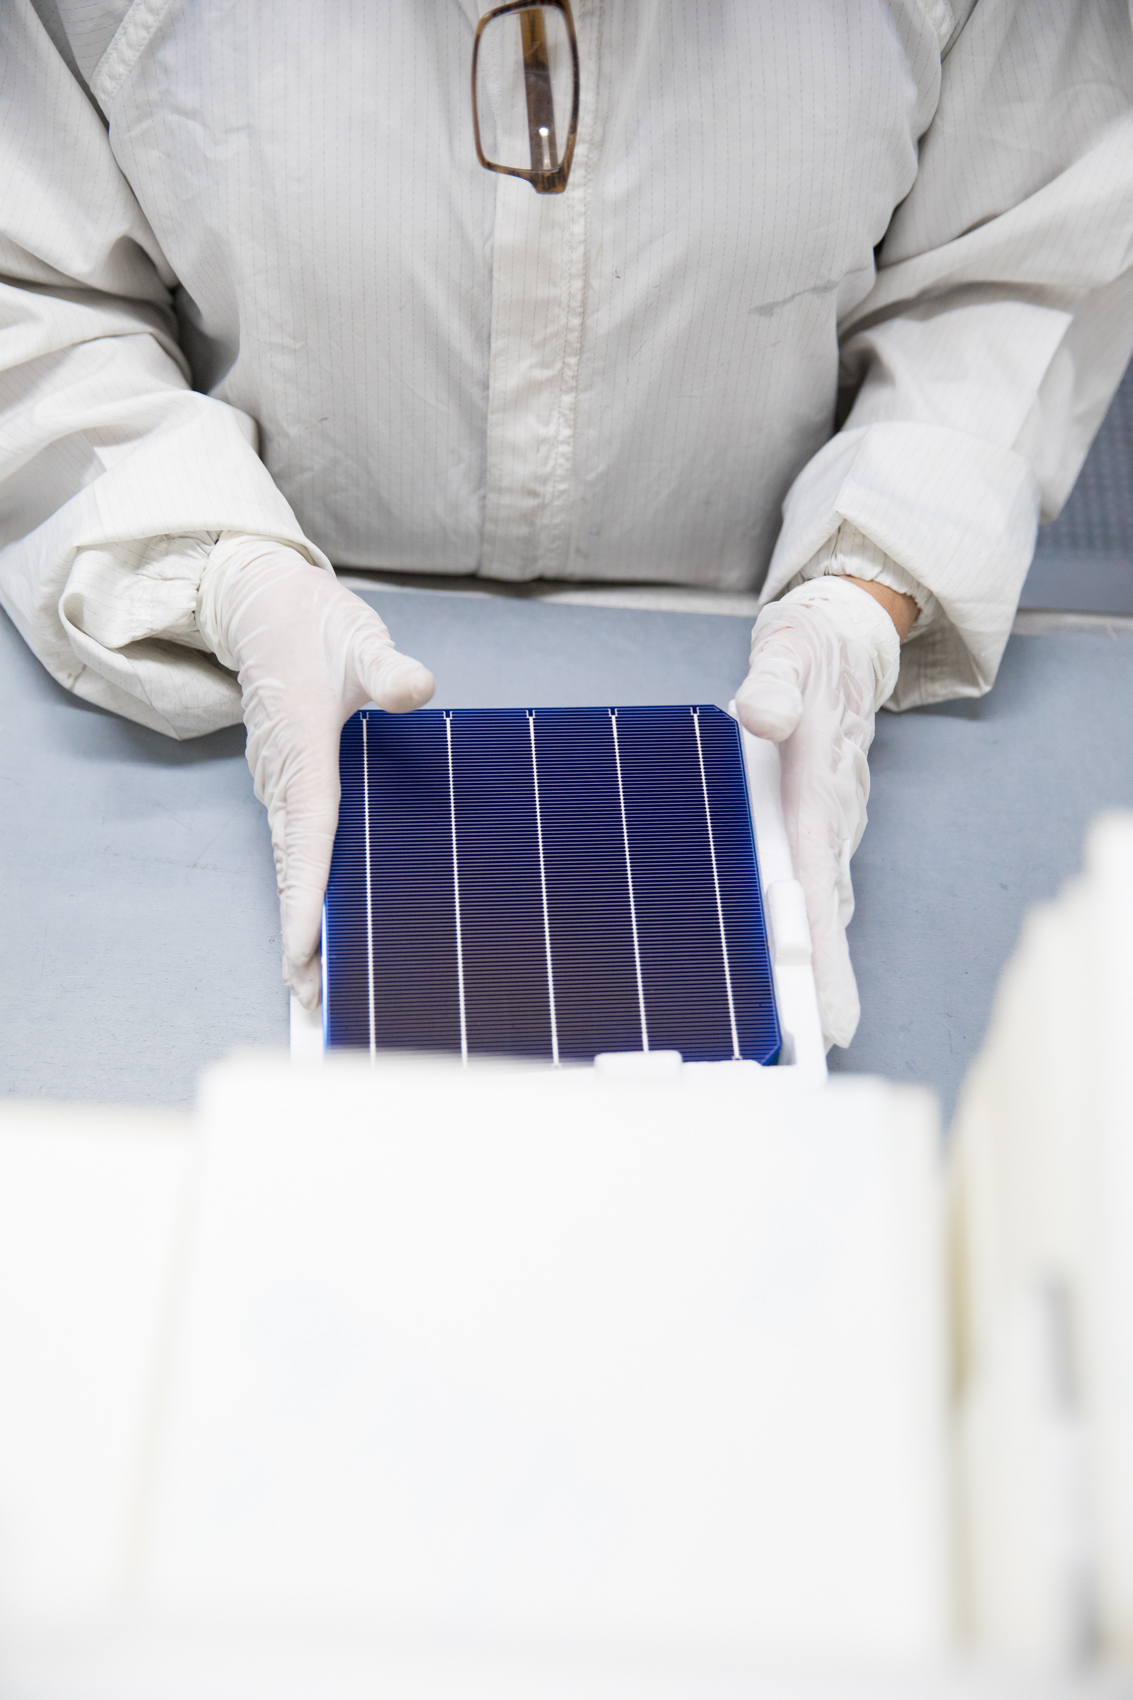 hands inspecting solar cells renewables photographer Rich Crowder